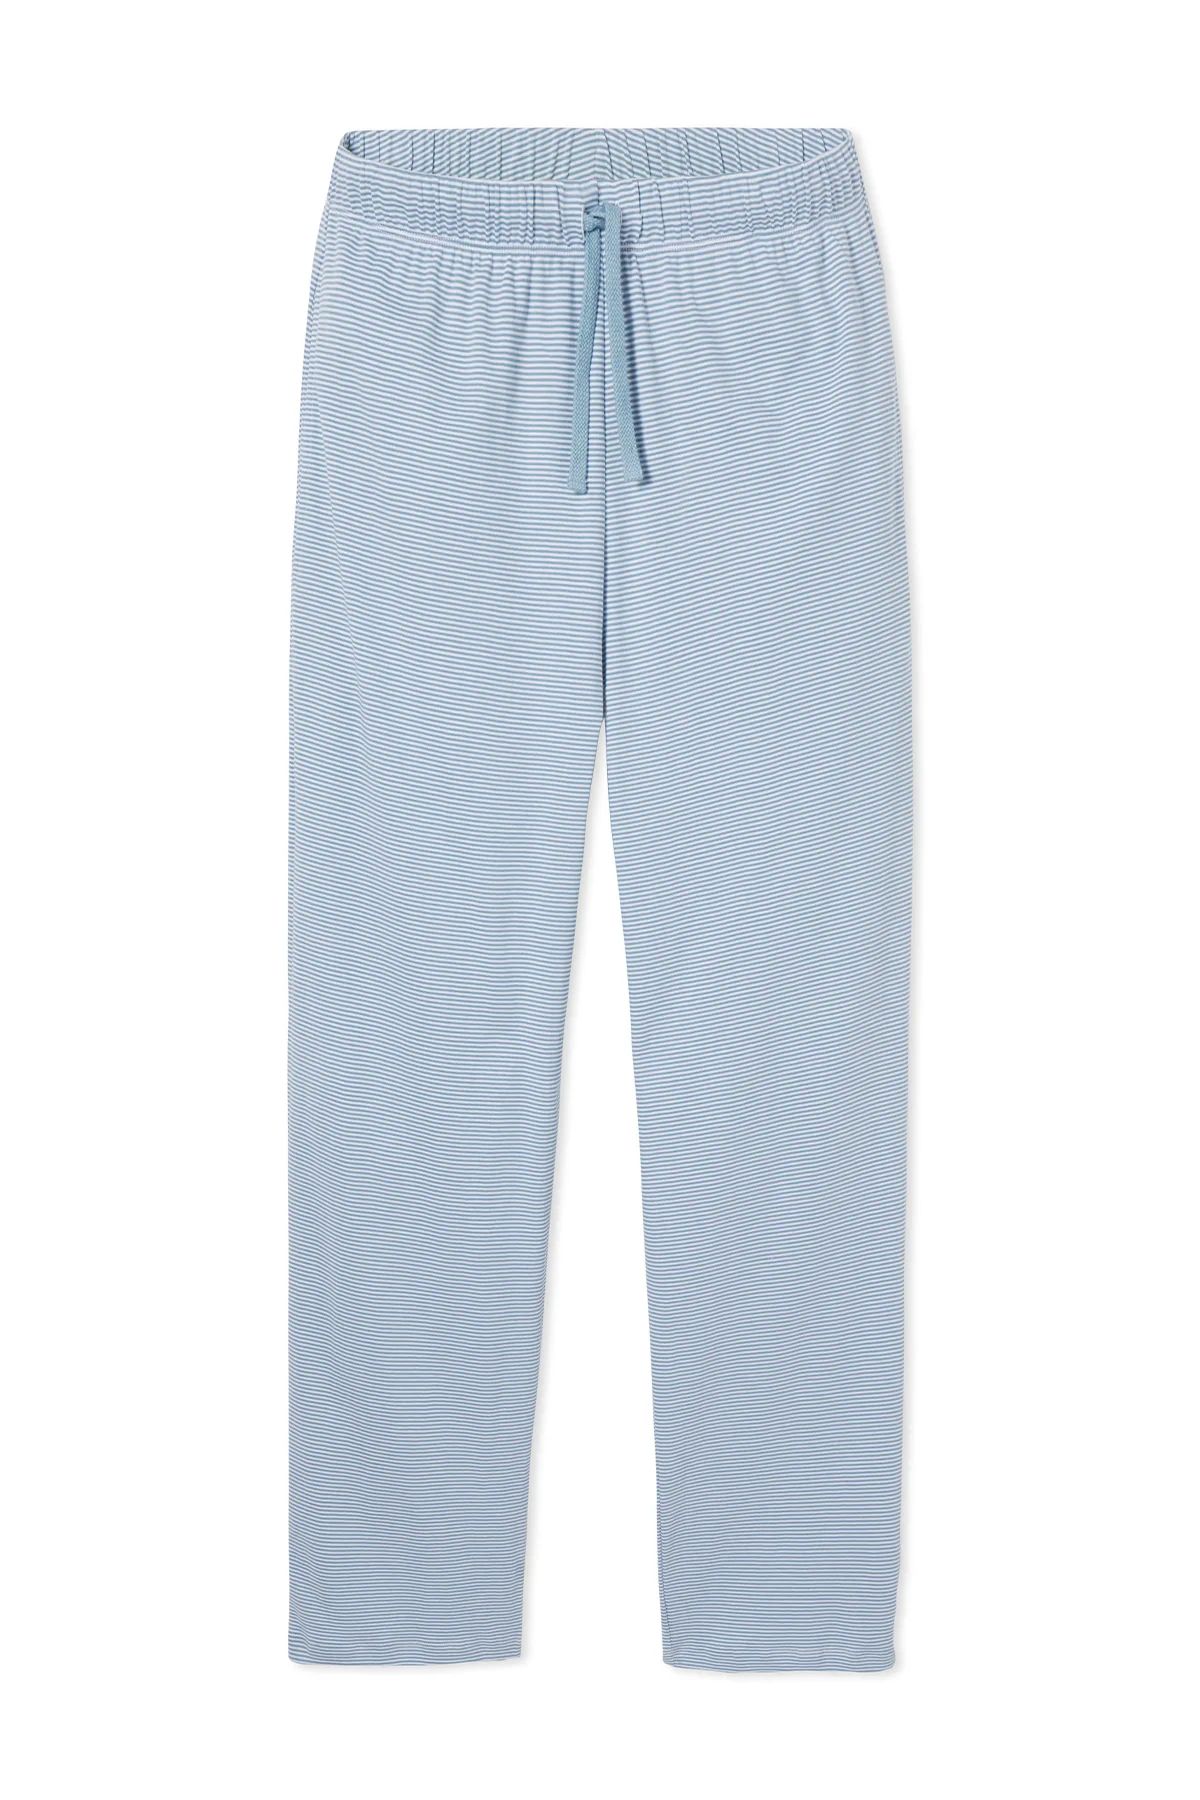 Men's Pima Pajama Pants in Mineral Blue | Lake Pajamas